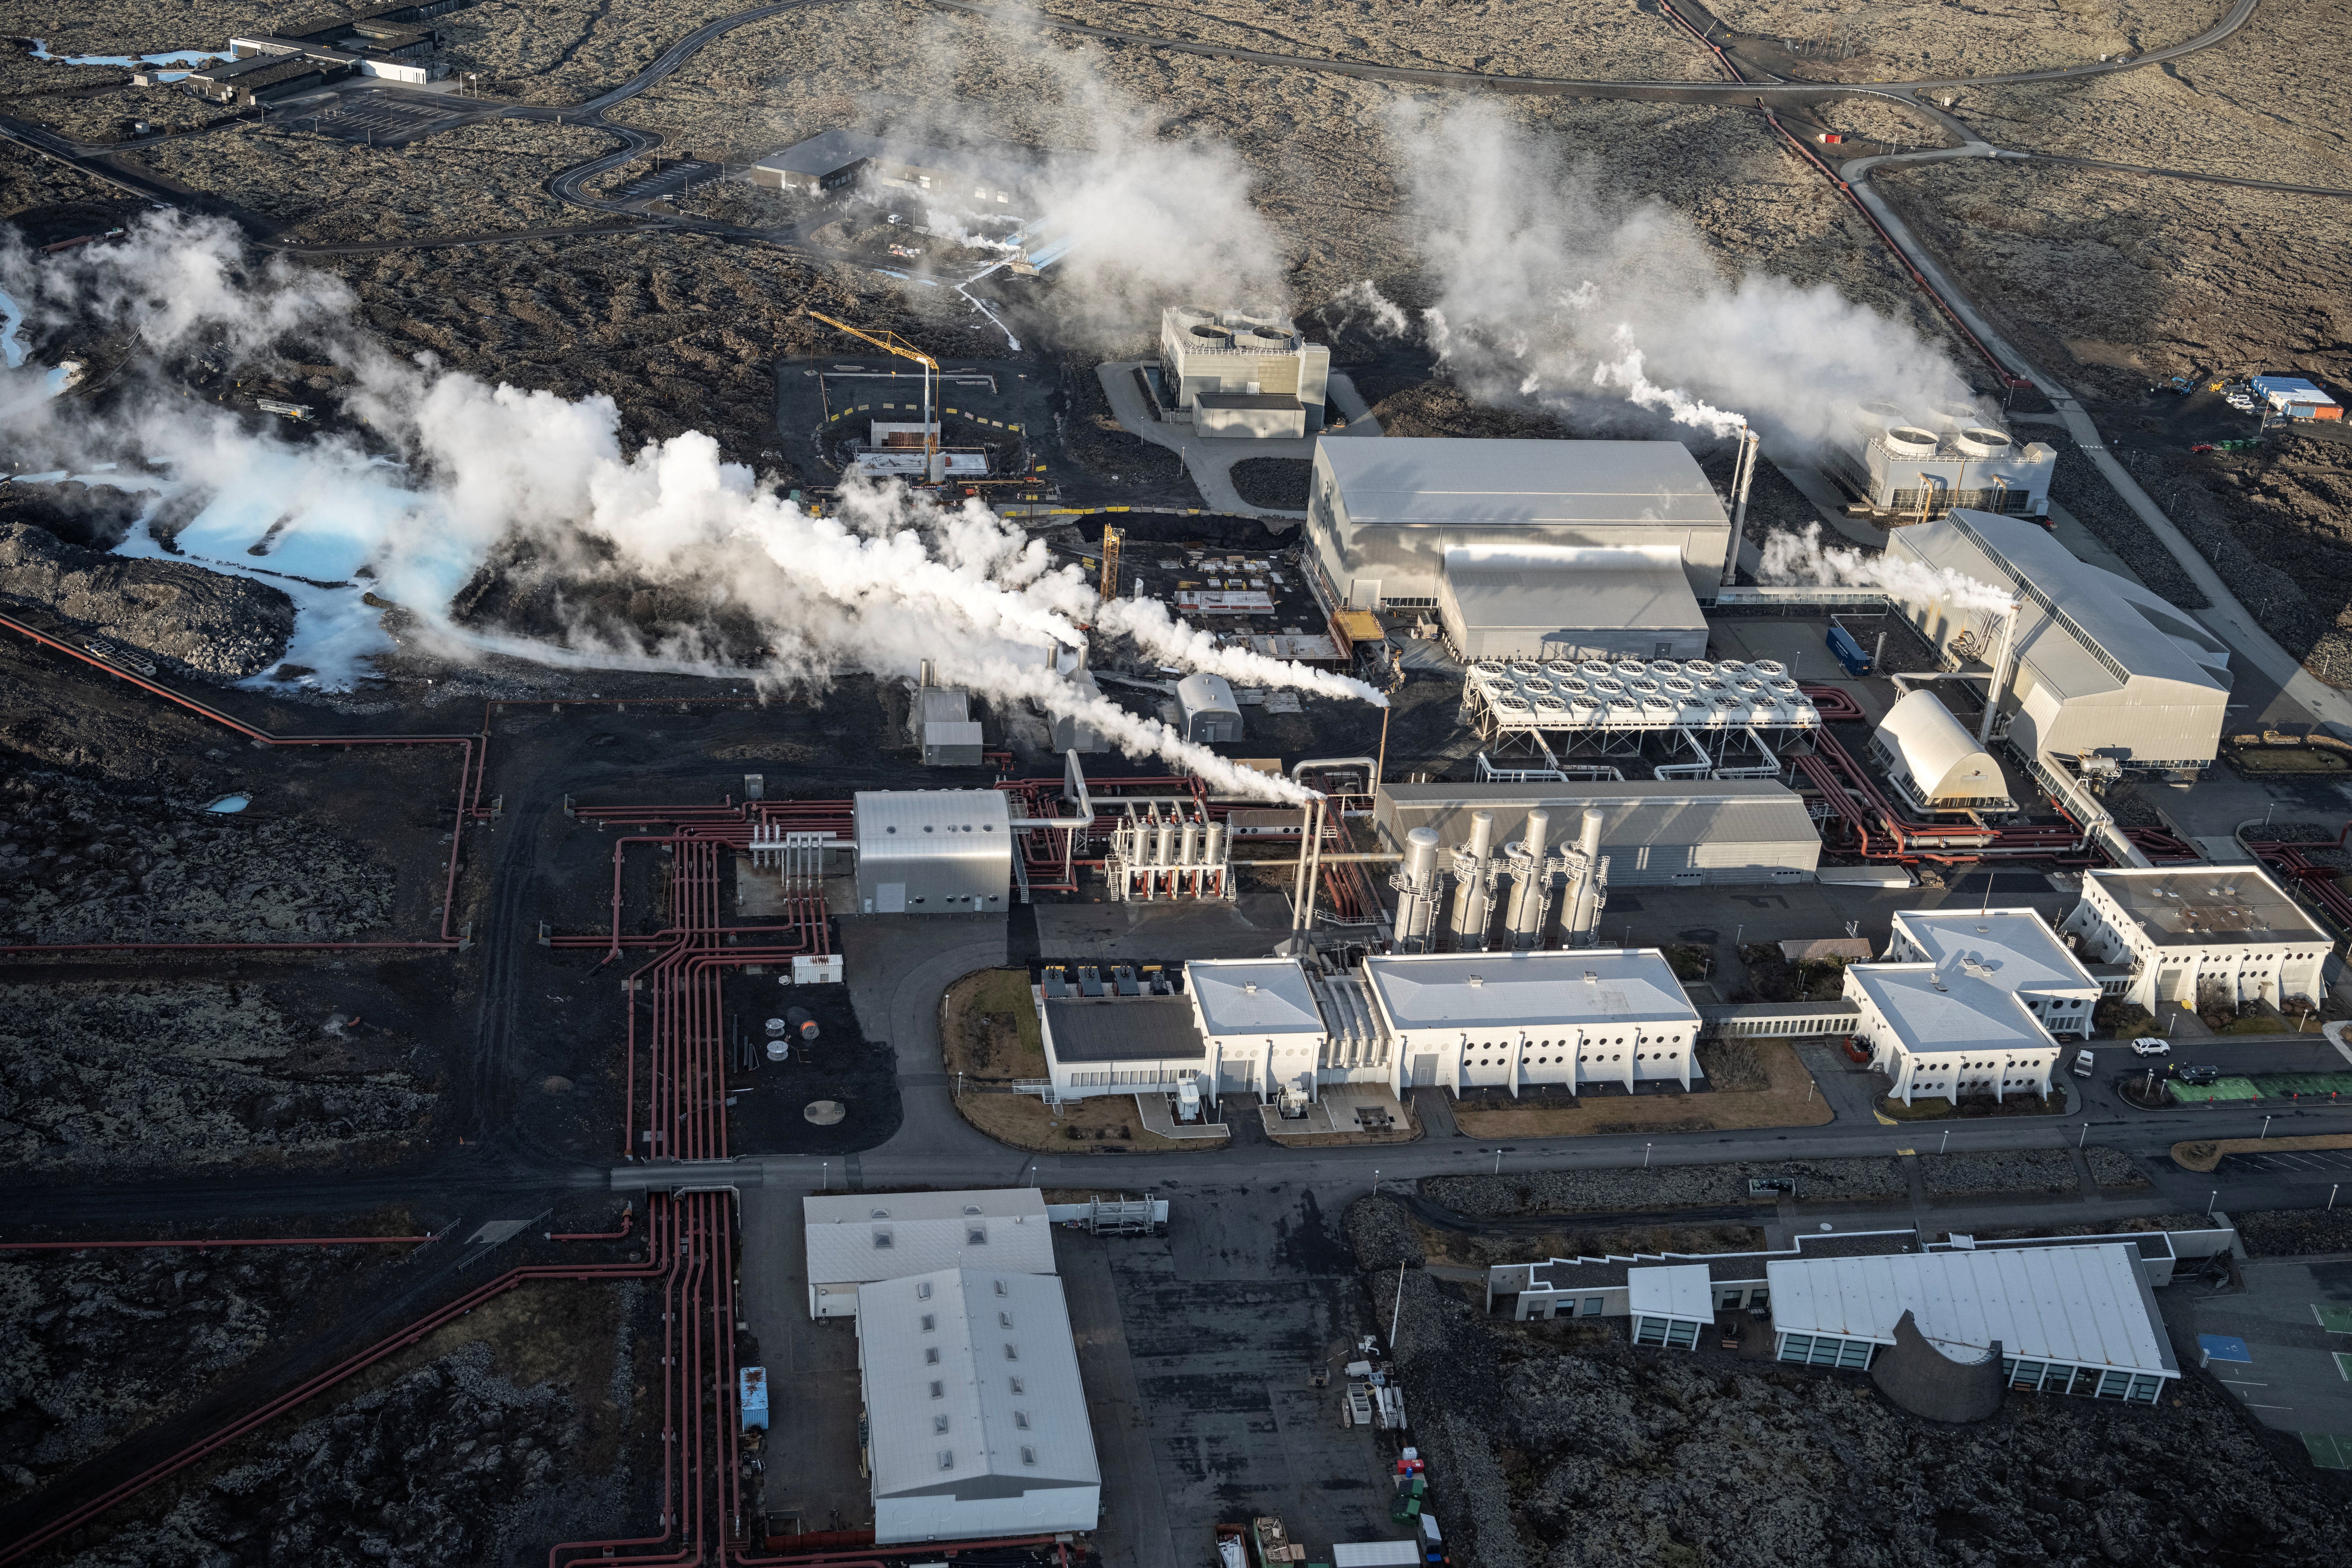 The Svartsengi geothermal power plant near the evacuated town of Grindavik